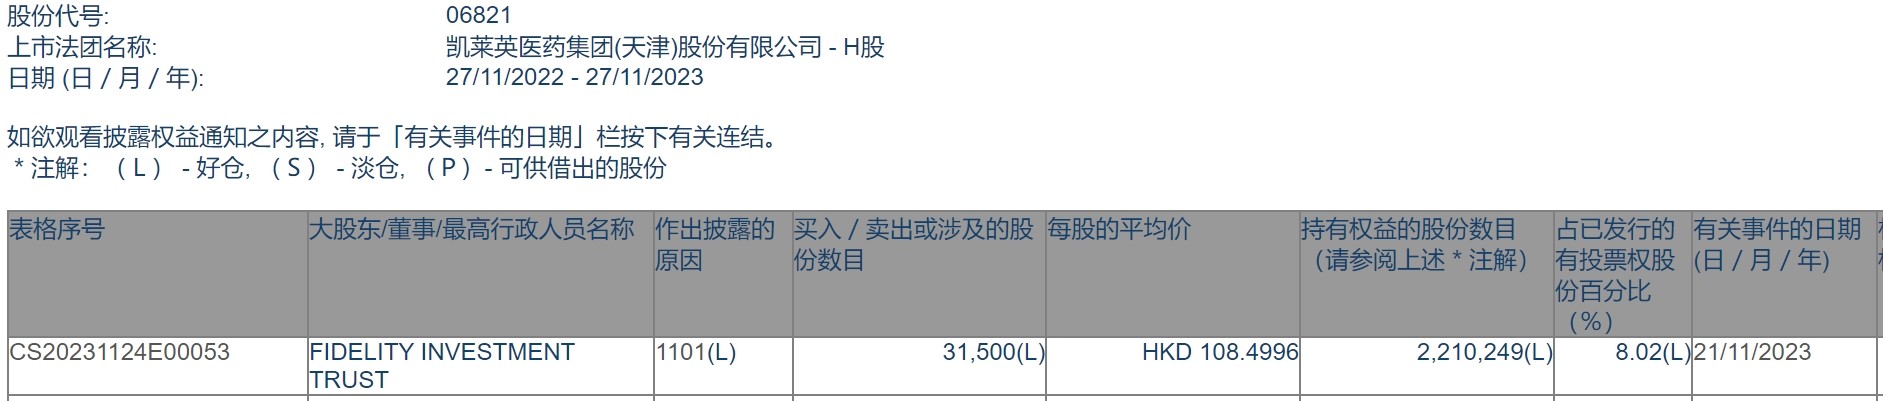 FIDELITY INVESTMENT TRUST增持凯莱英(06821)3.15万股 每股作价约108.50港元